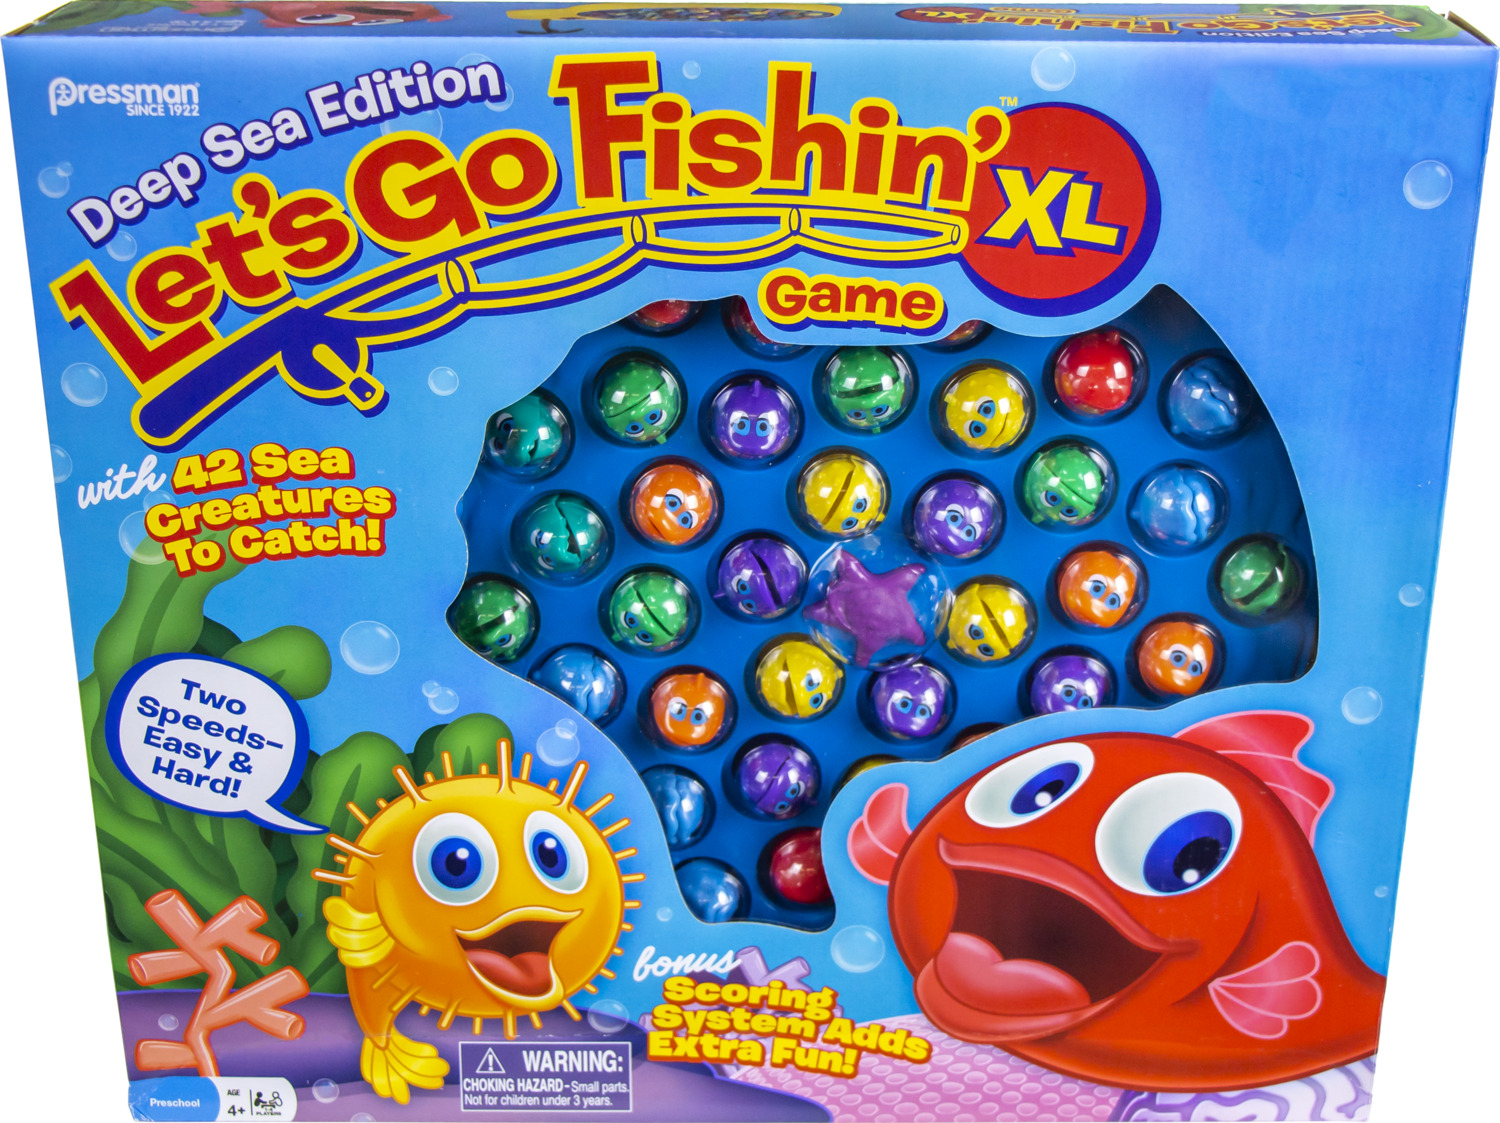 Let's Go Fishin' Xl Deep Sea Edition - Toy Box Michigan family toy